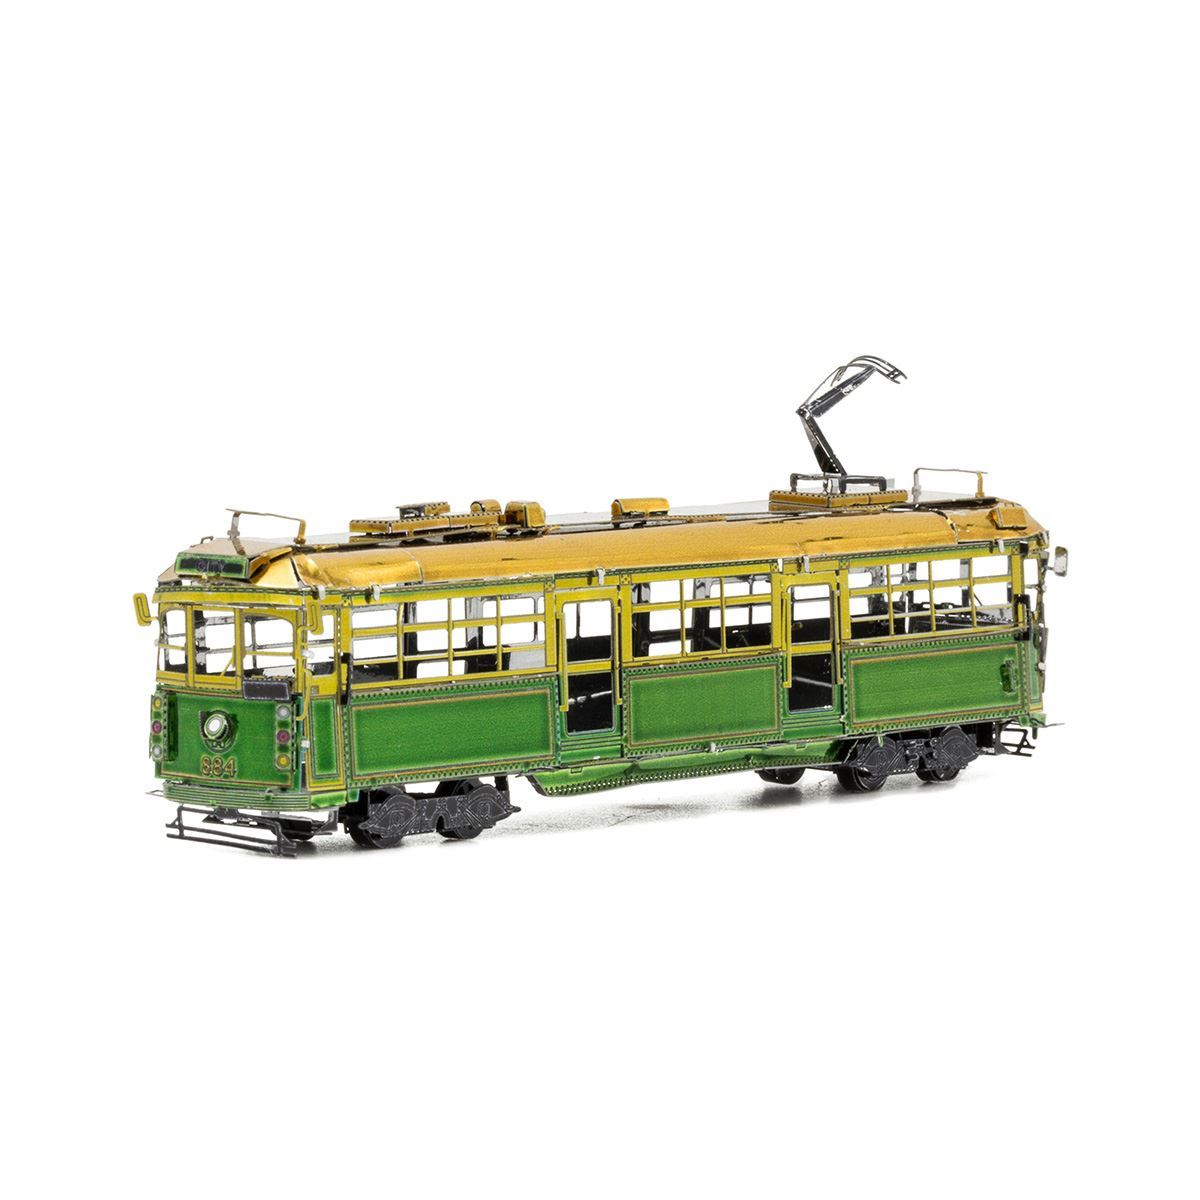 Tweezers 11586 Metal Earth Melbourne W-Class Tram 3D Metal Model 